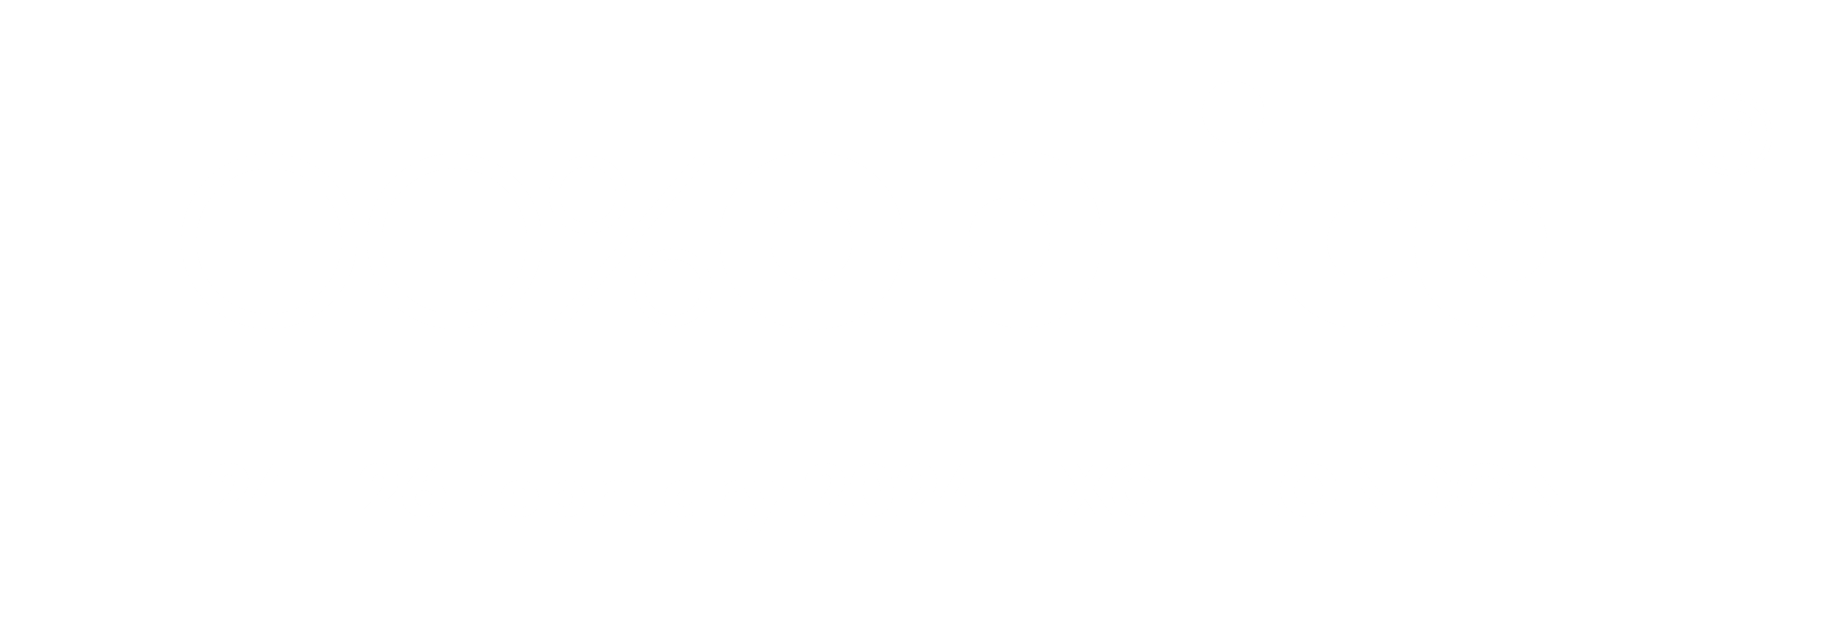 <p>2024 100% Optical</p>